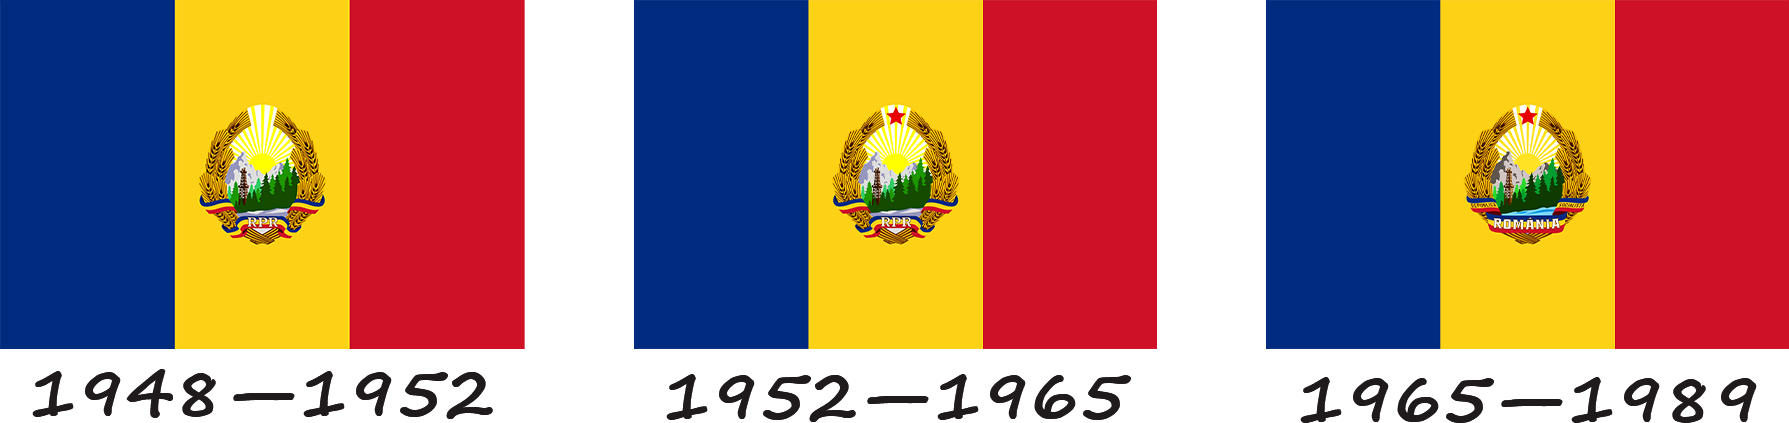 Histoire du drapeau roumain